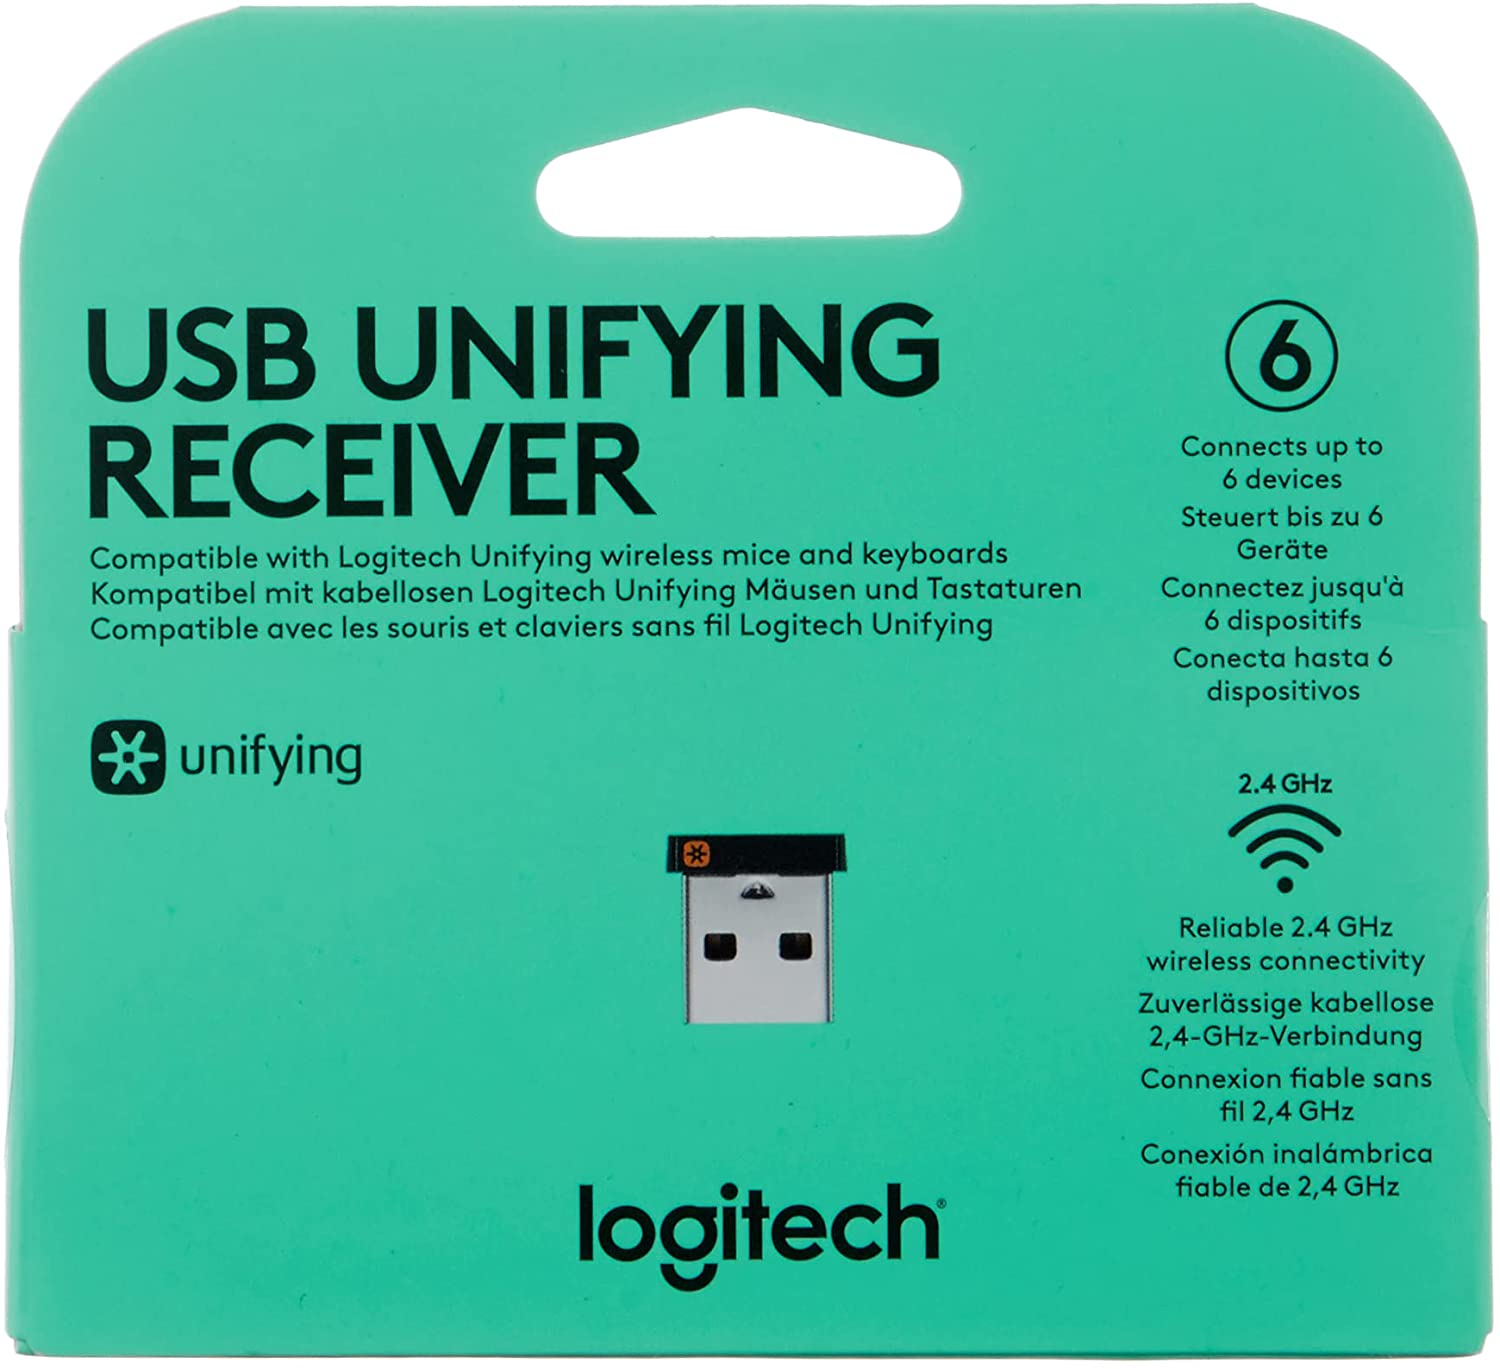 Buy Logitech USB Unifying Receiver Receiver Black Online in UAE Sharaf DG